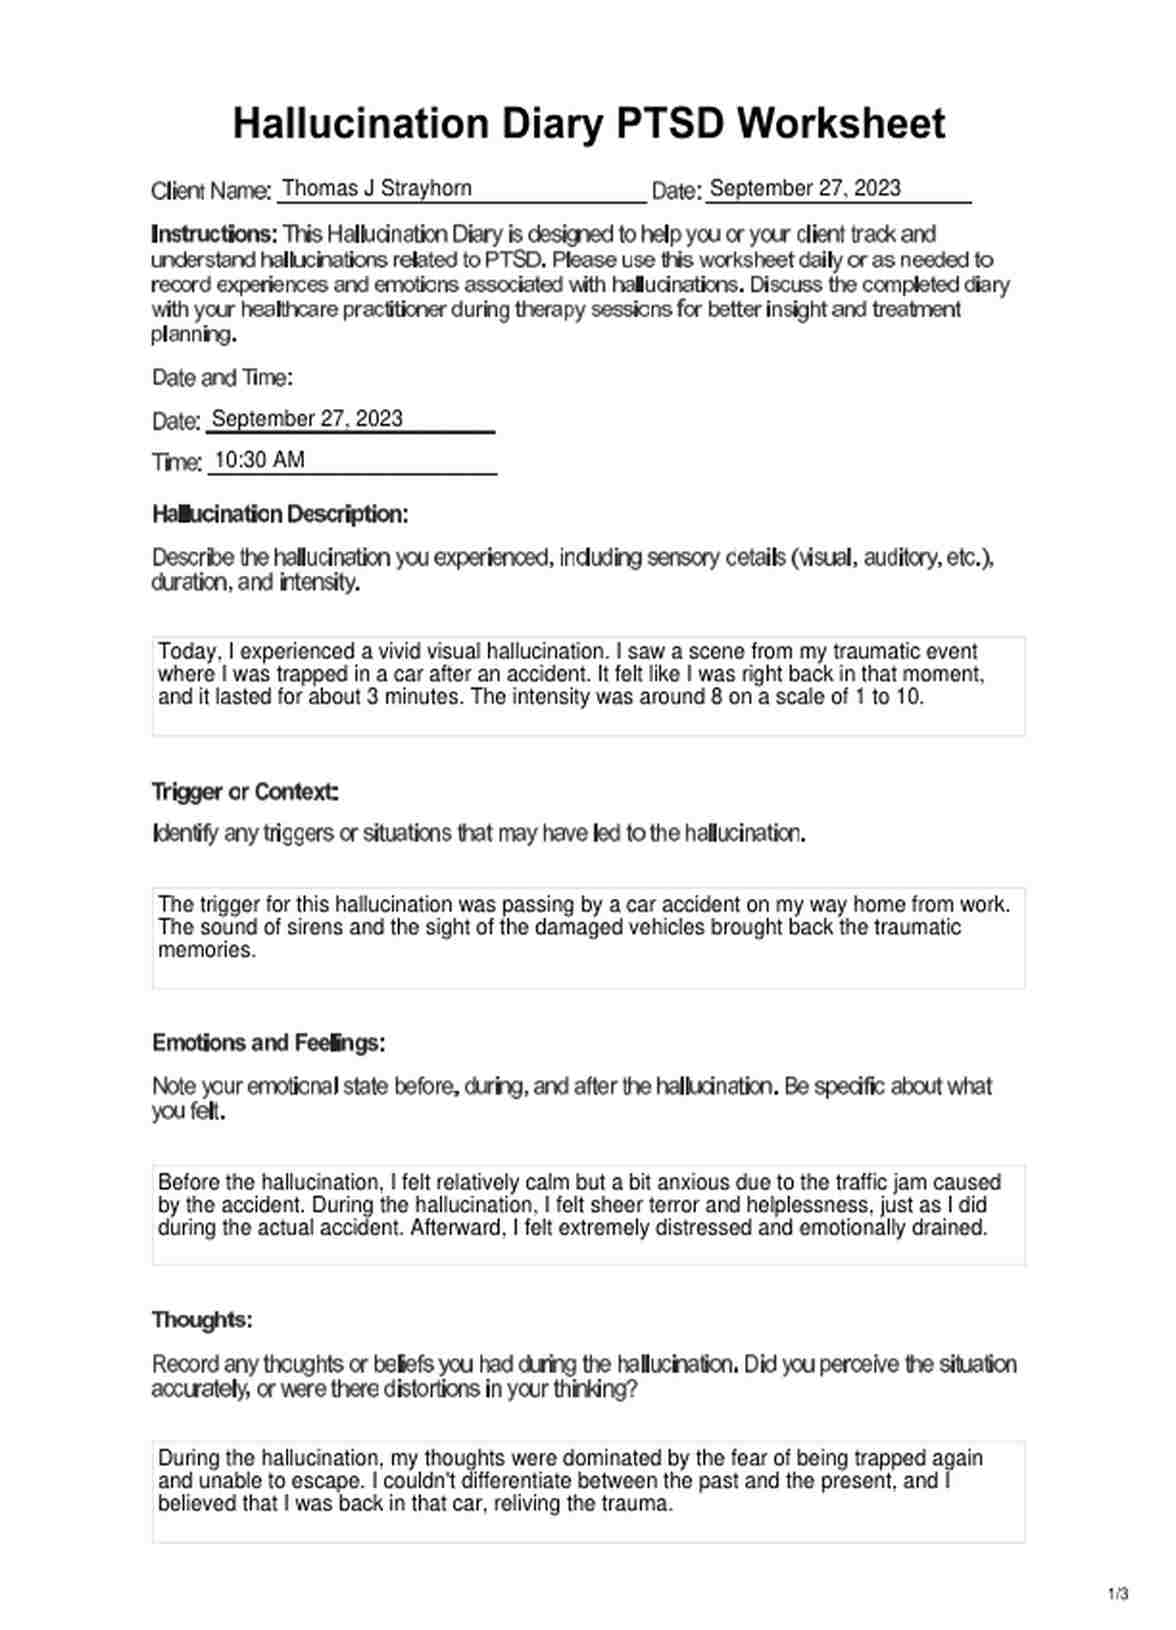 Hallucination Diary PTSD Worksheet PDF Example